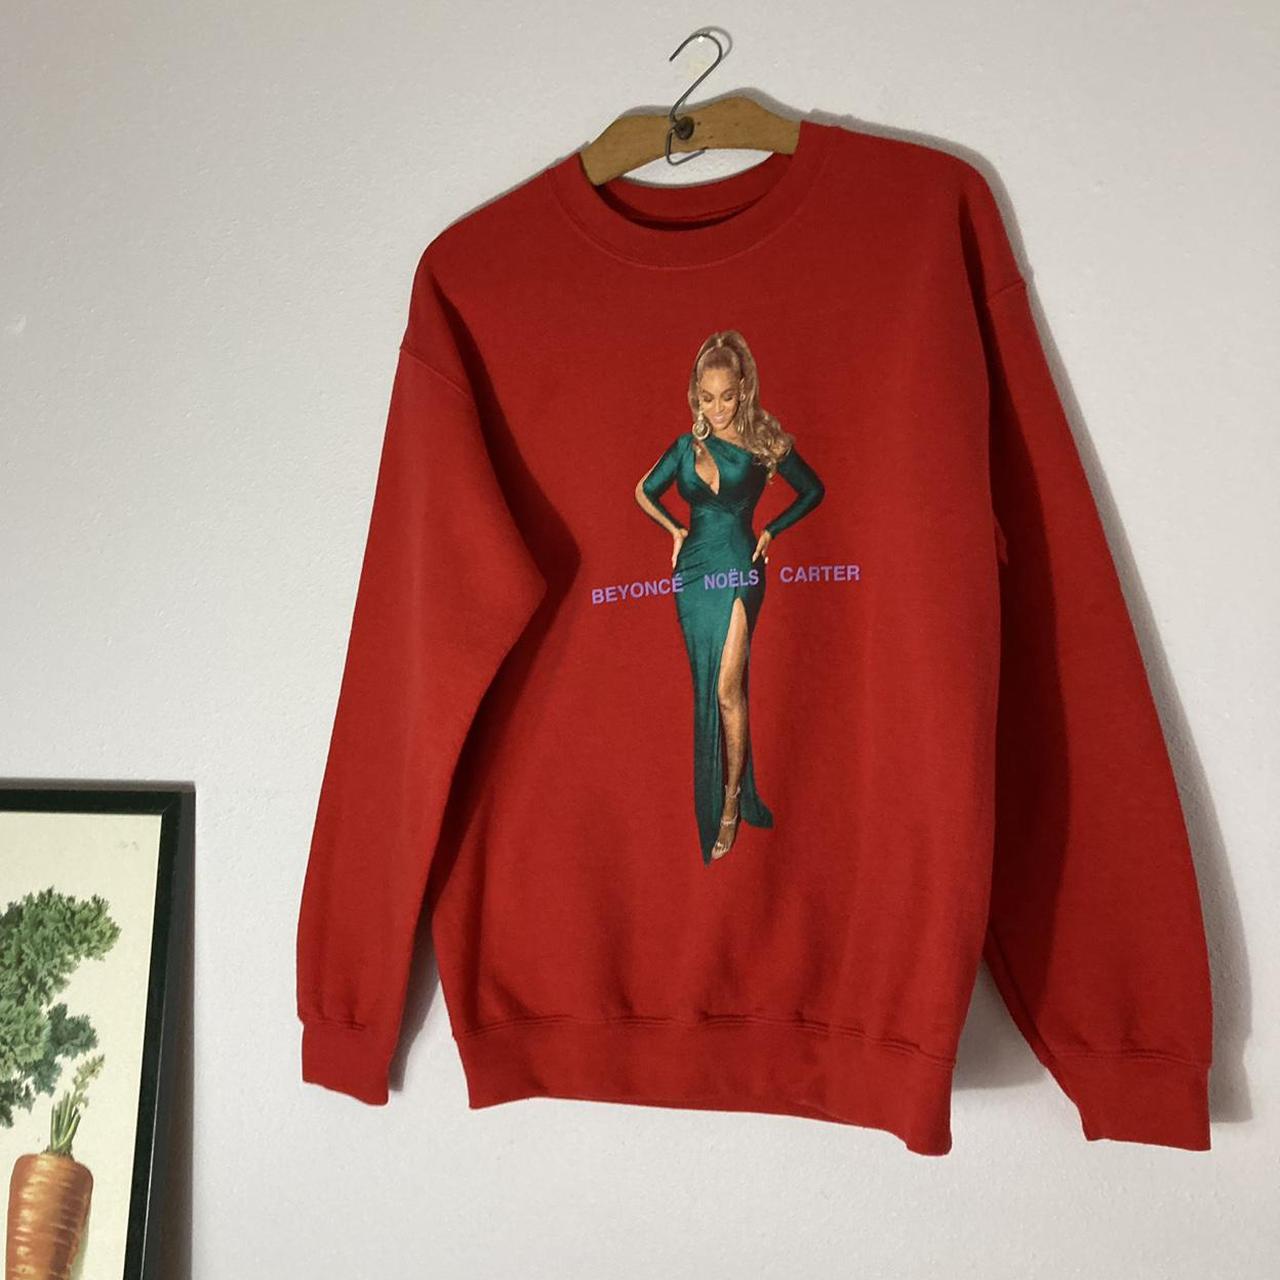 Product Image 1 - Red Beyoncé NOELS Carter sweatshirt

Perfect